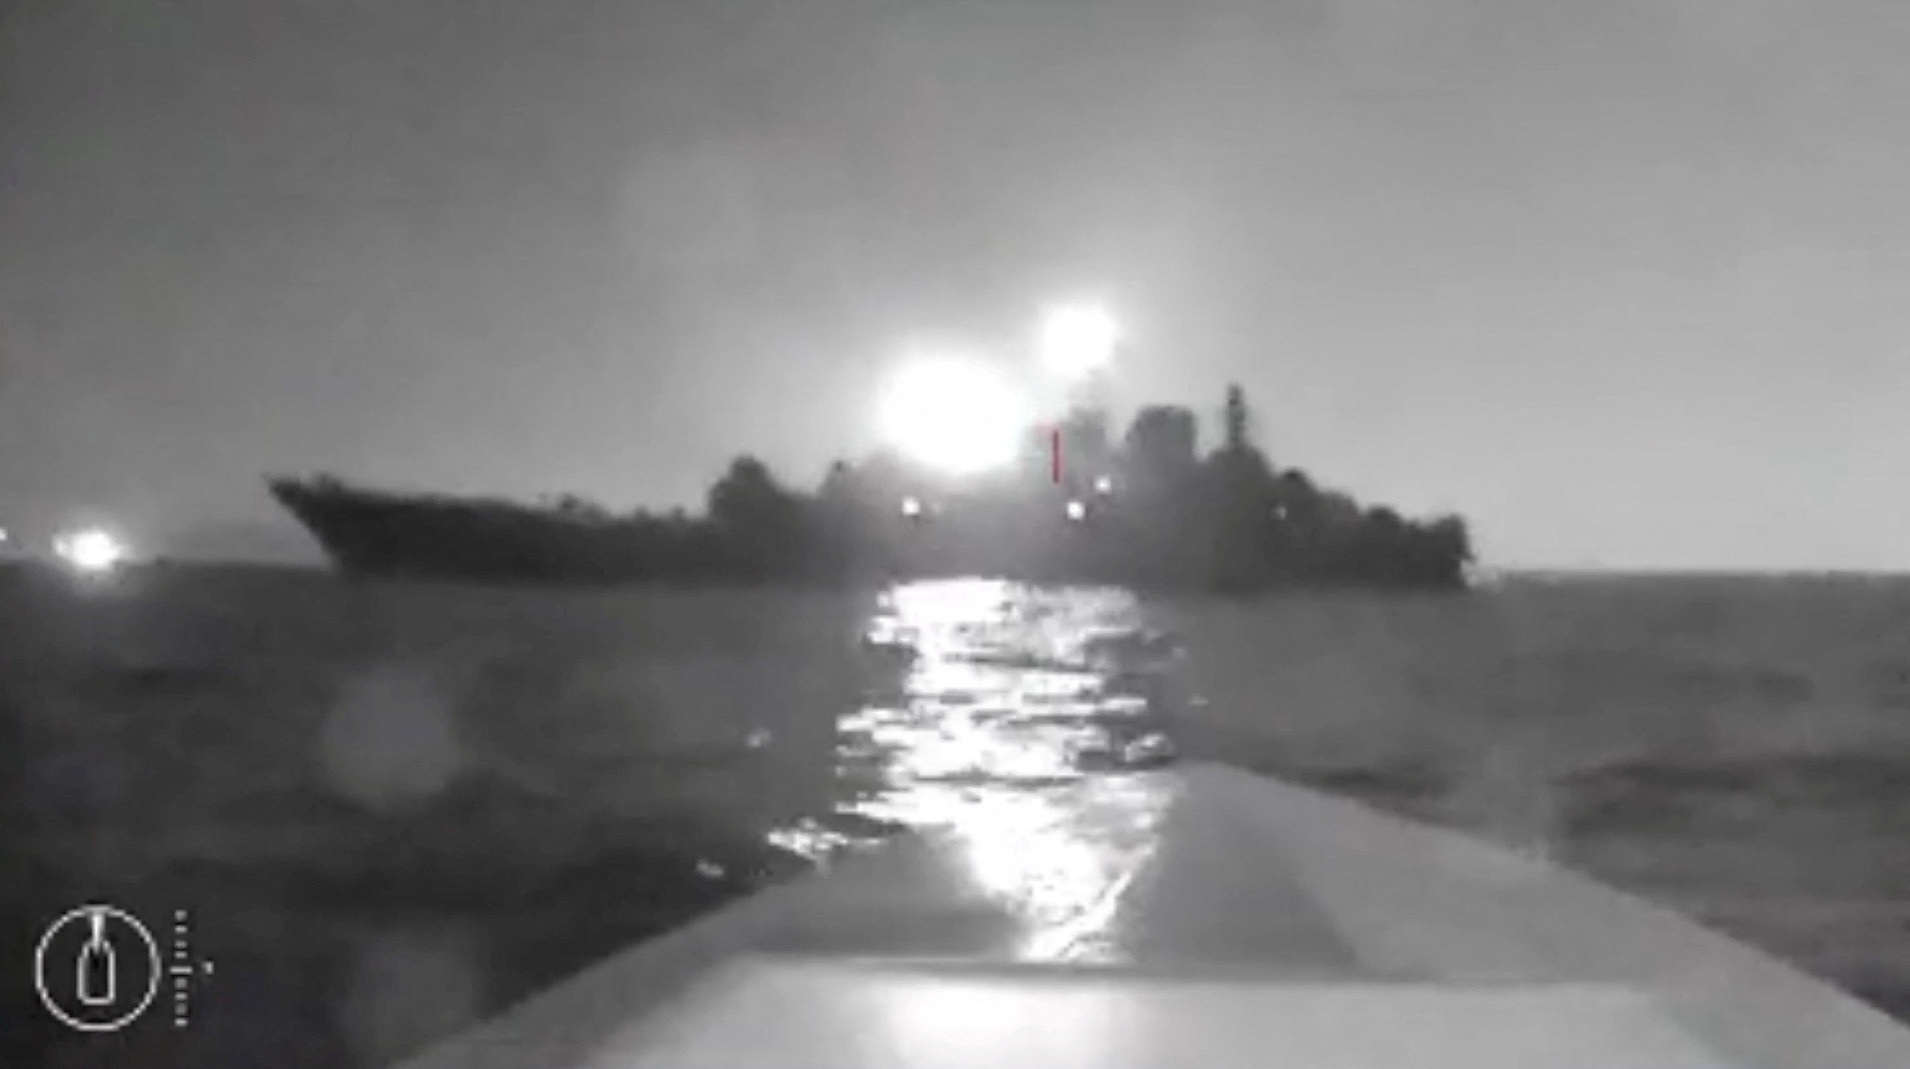 Sea drone shows the silhouette of Olenegorsky Gornyak ship near the port of Novorossiysk